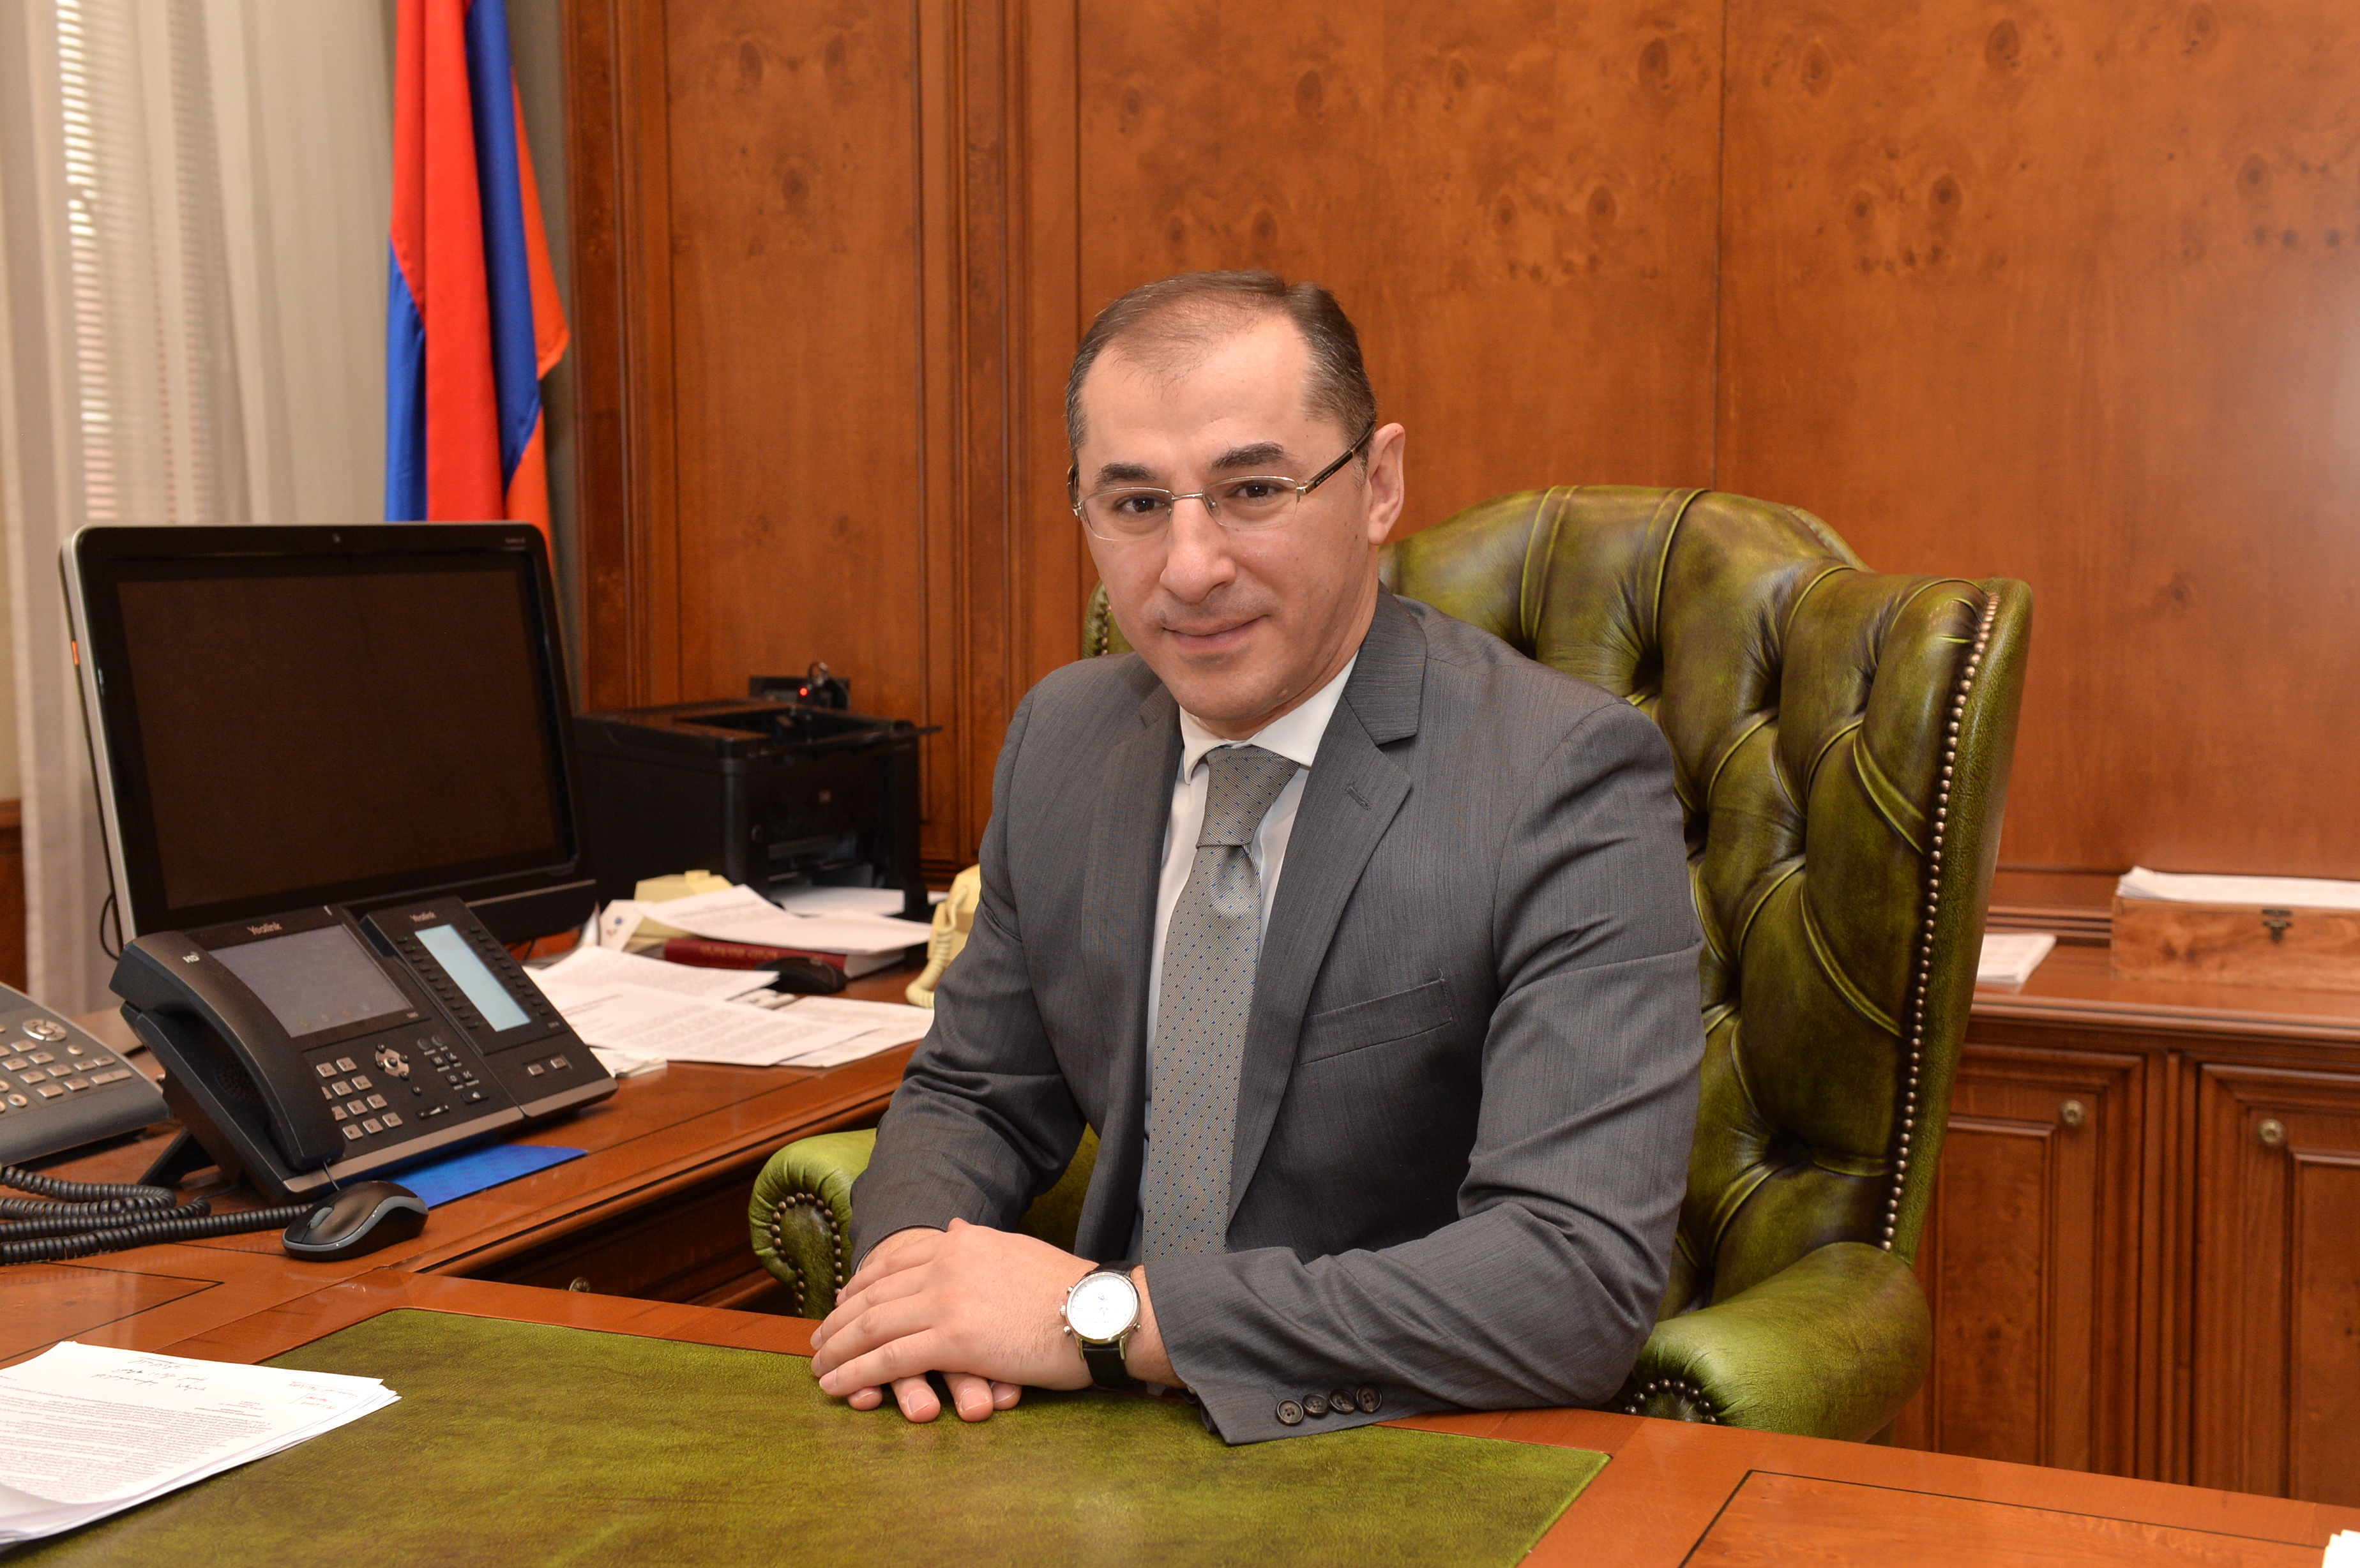 Vardan Aramyan, Acting Minister of Finance, Emerging Europe